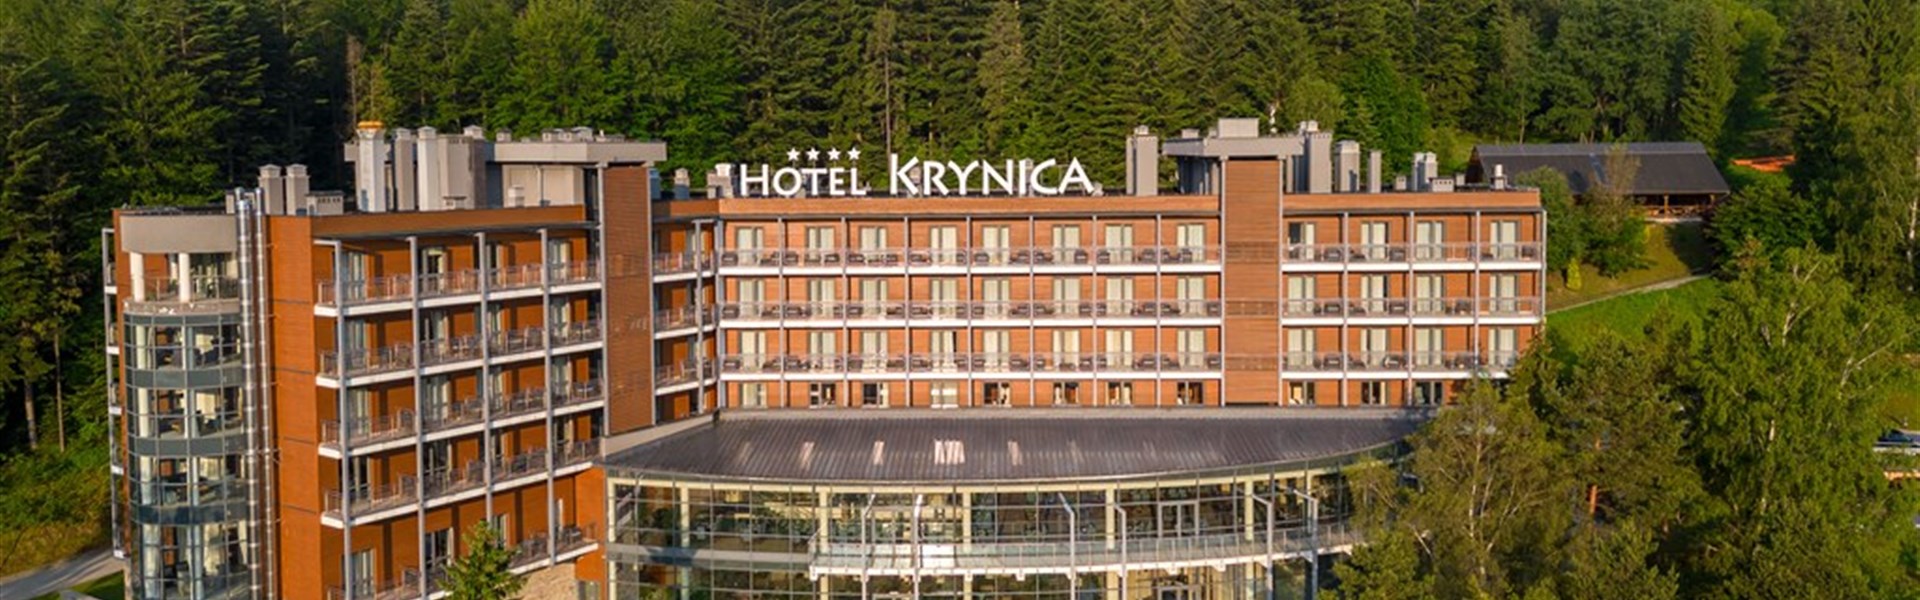 Marco Polo - Hotel Krynica - 